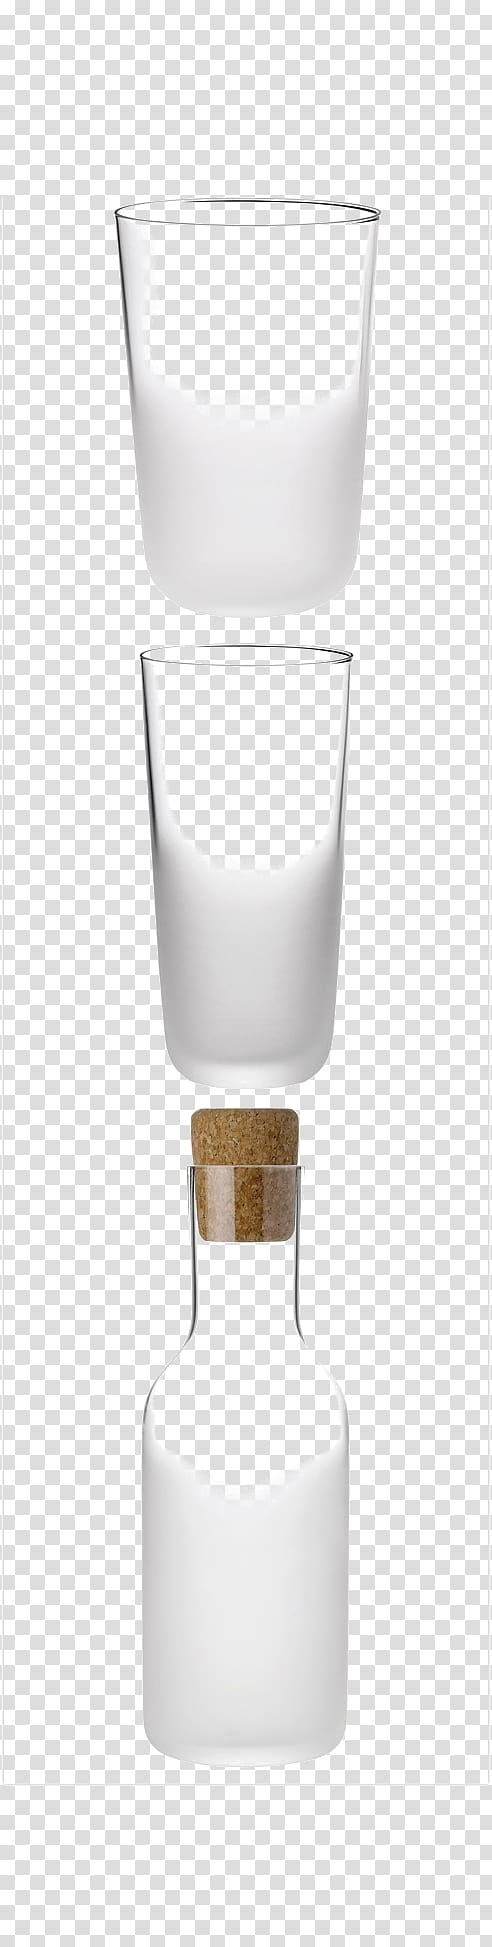 SuperCupNI Milk Glass, Milk Cup transparent background PNG clipart